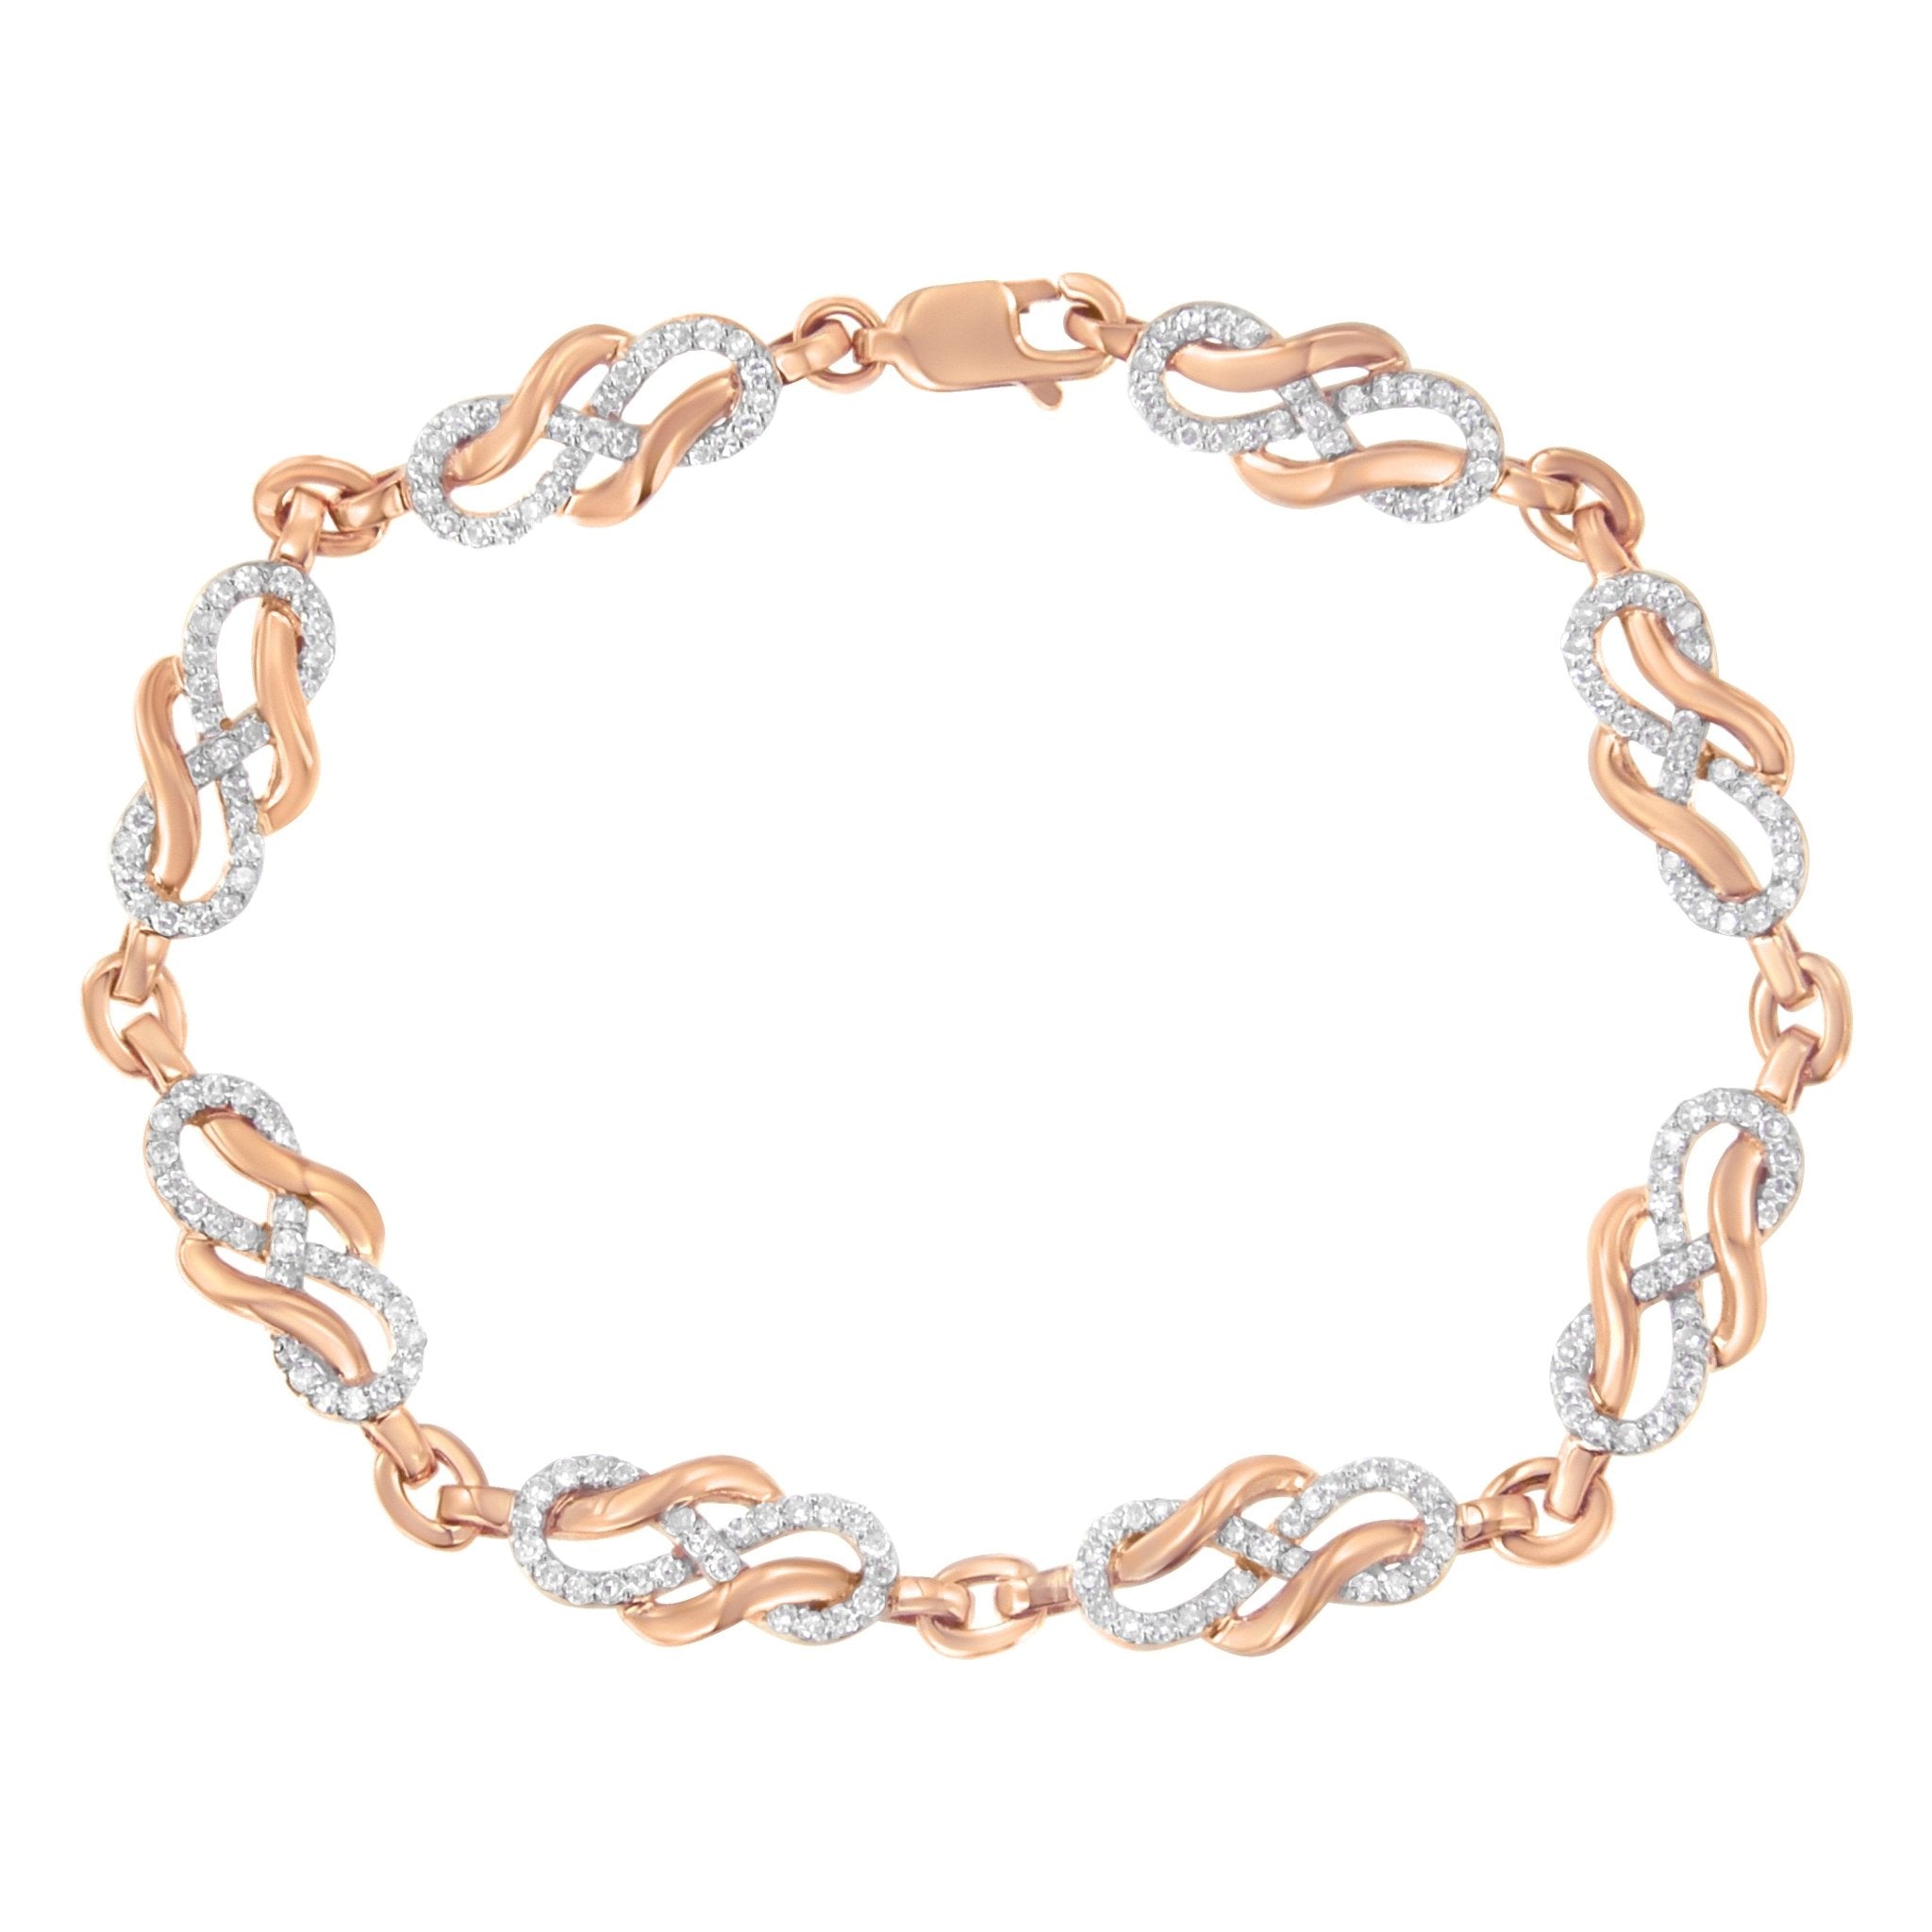 10K Rose Gold 1.0 Cttw Diamond Infinity Loop And Swirl Link Bracelet (I-J Color, I2-I3 Clarity) - 7.25